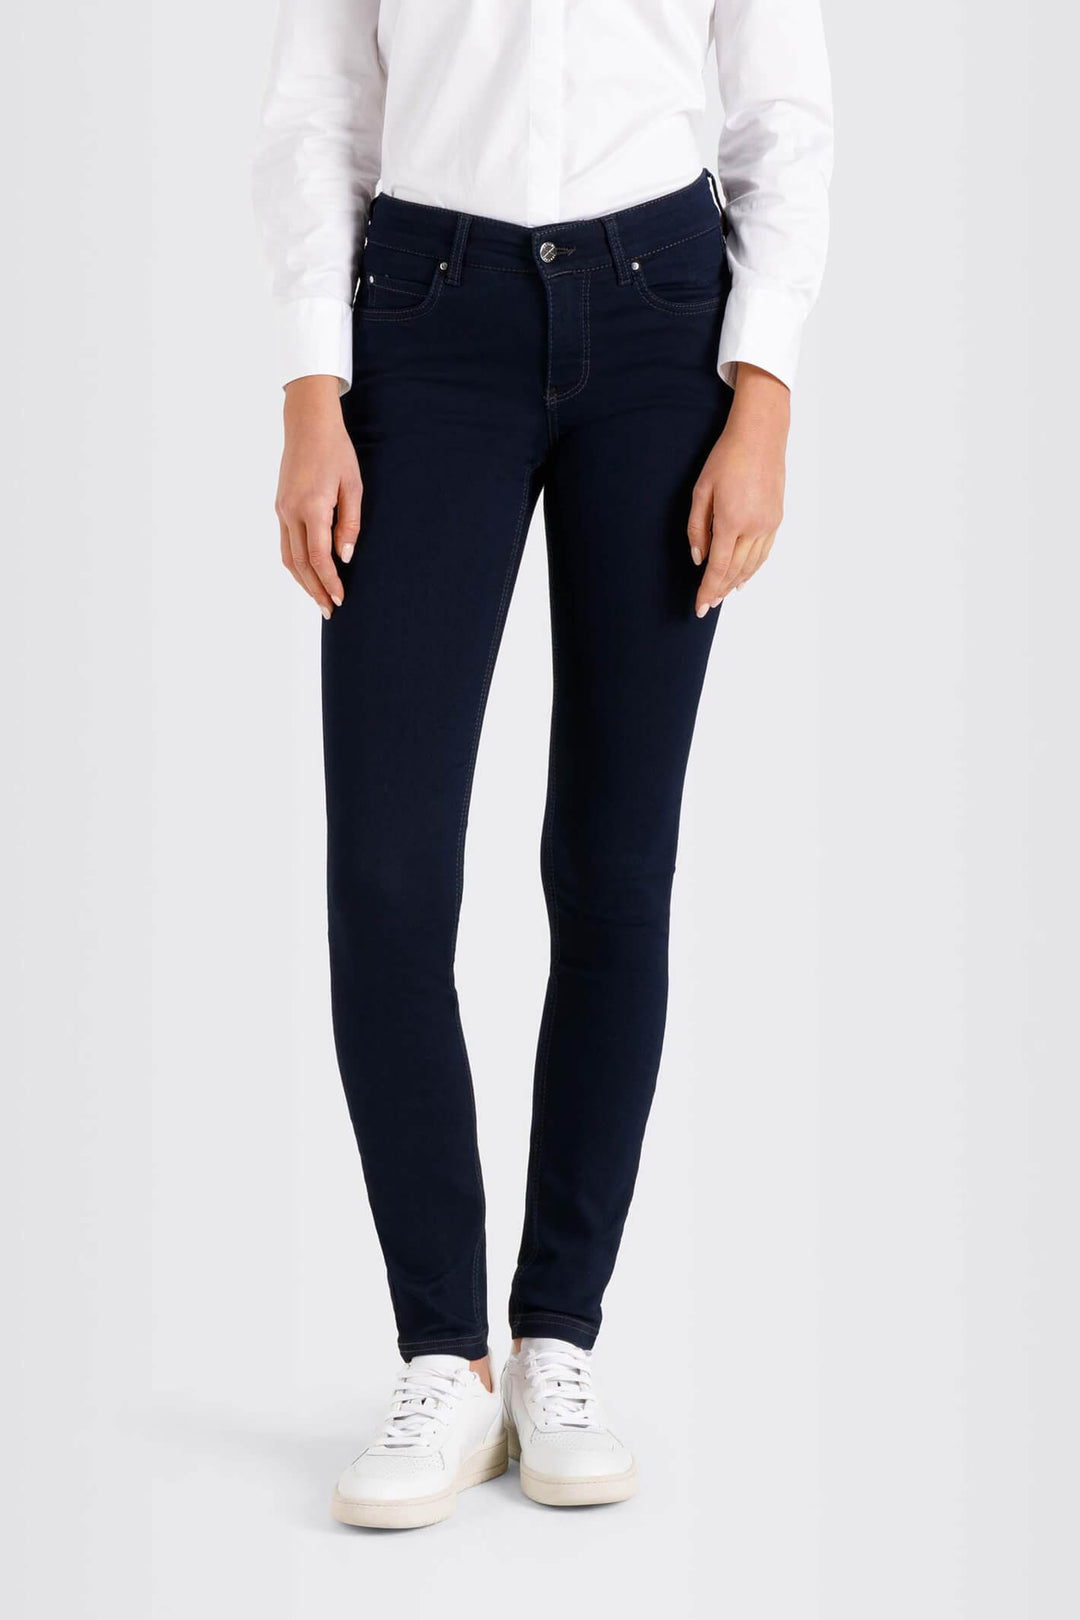 MAC 5402-90-D801 Dream Dark Denim Skinny Jeans - Olivia Grace Fashion